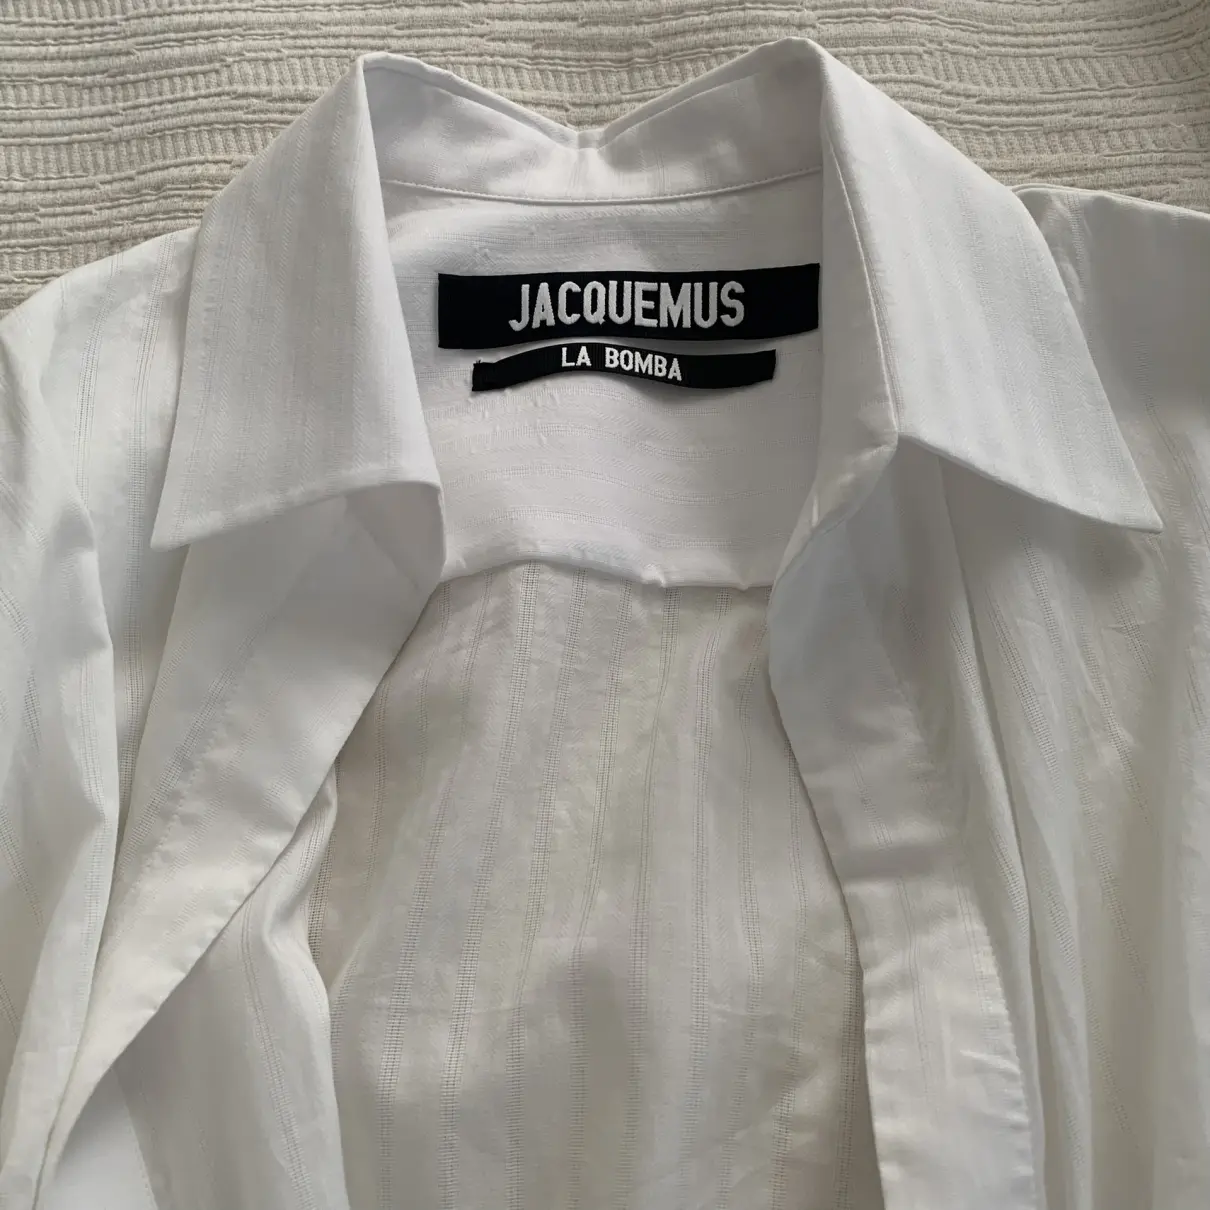 Buy Jacquemus Bahia shirt online